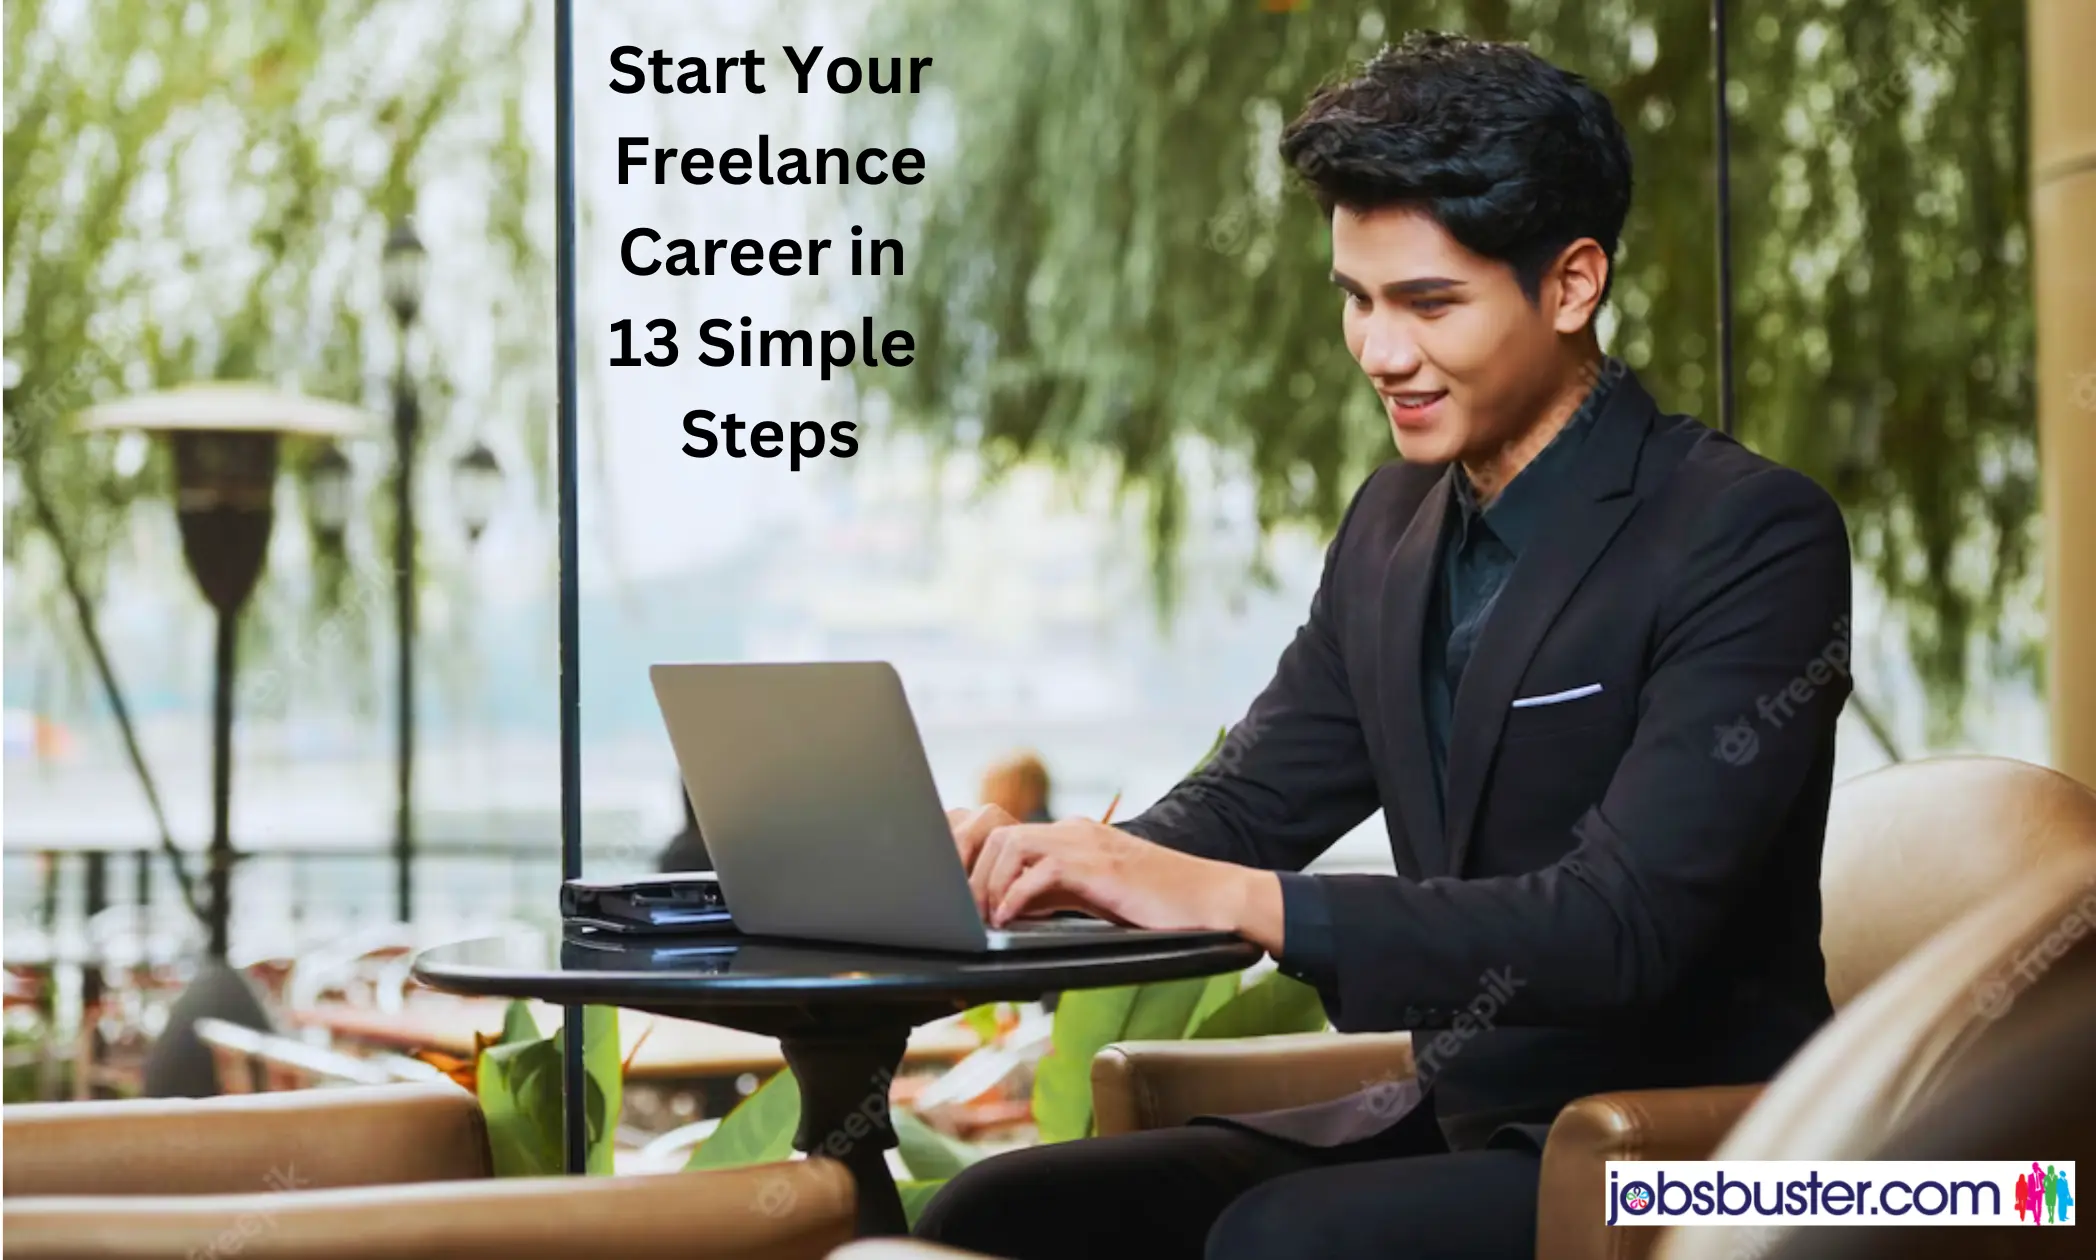 Start Your Freelance Career in 13 Simple Steps